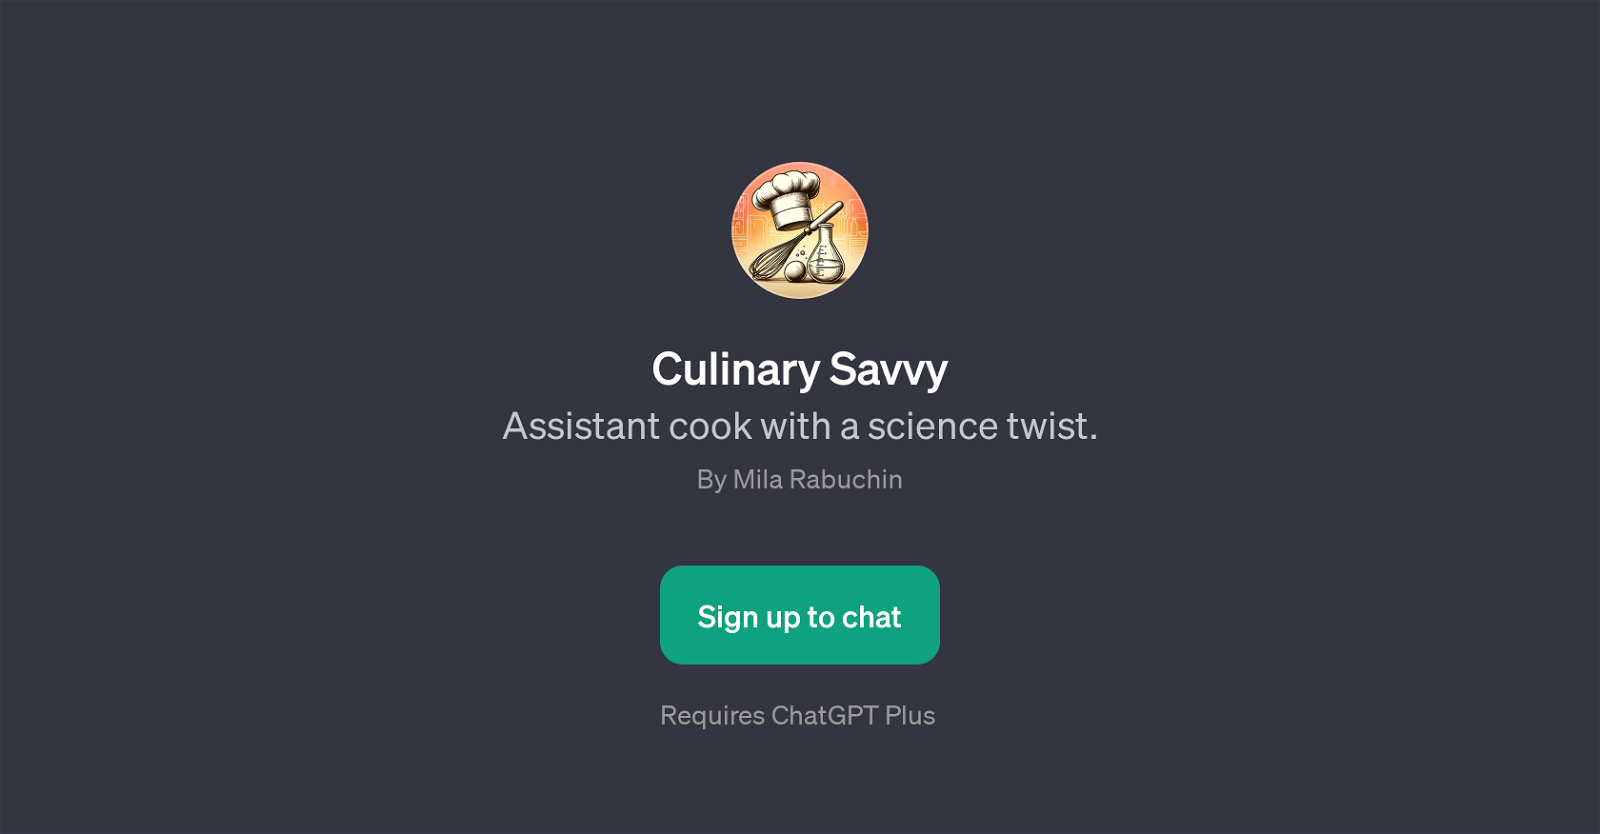 Culinary Savvy website